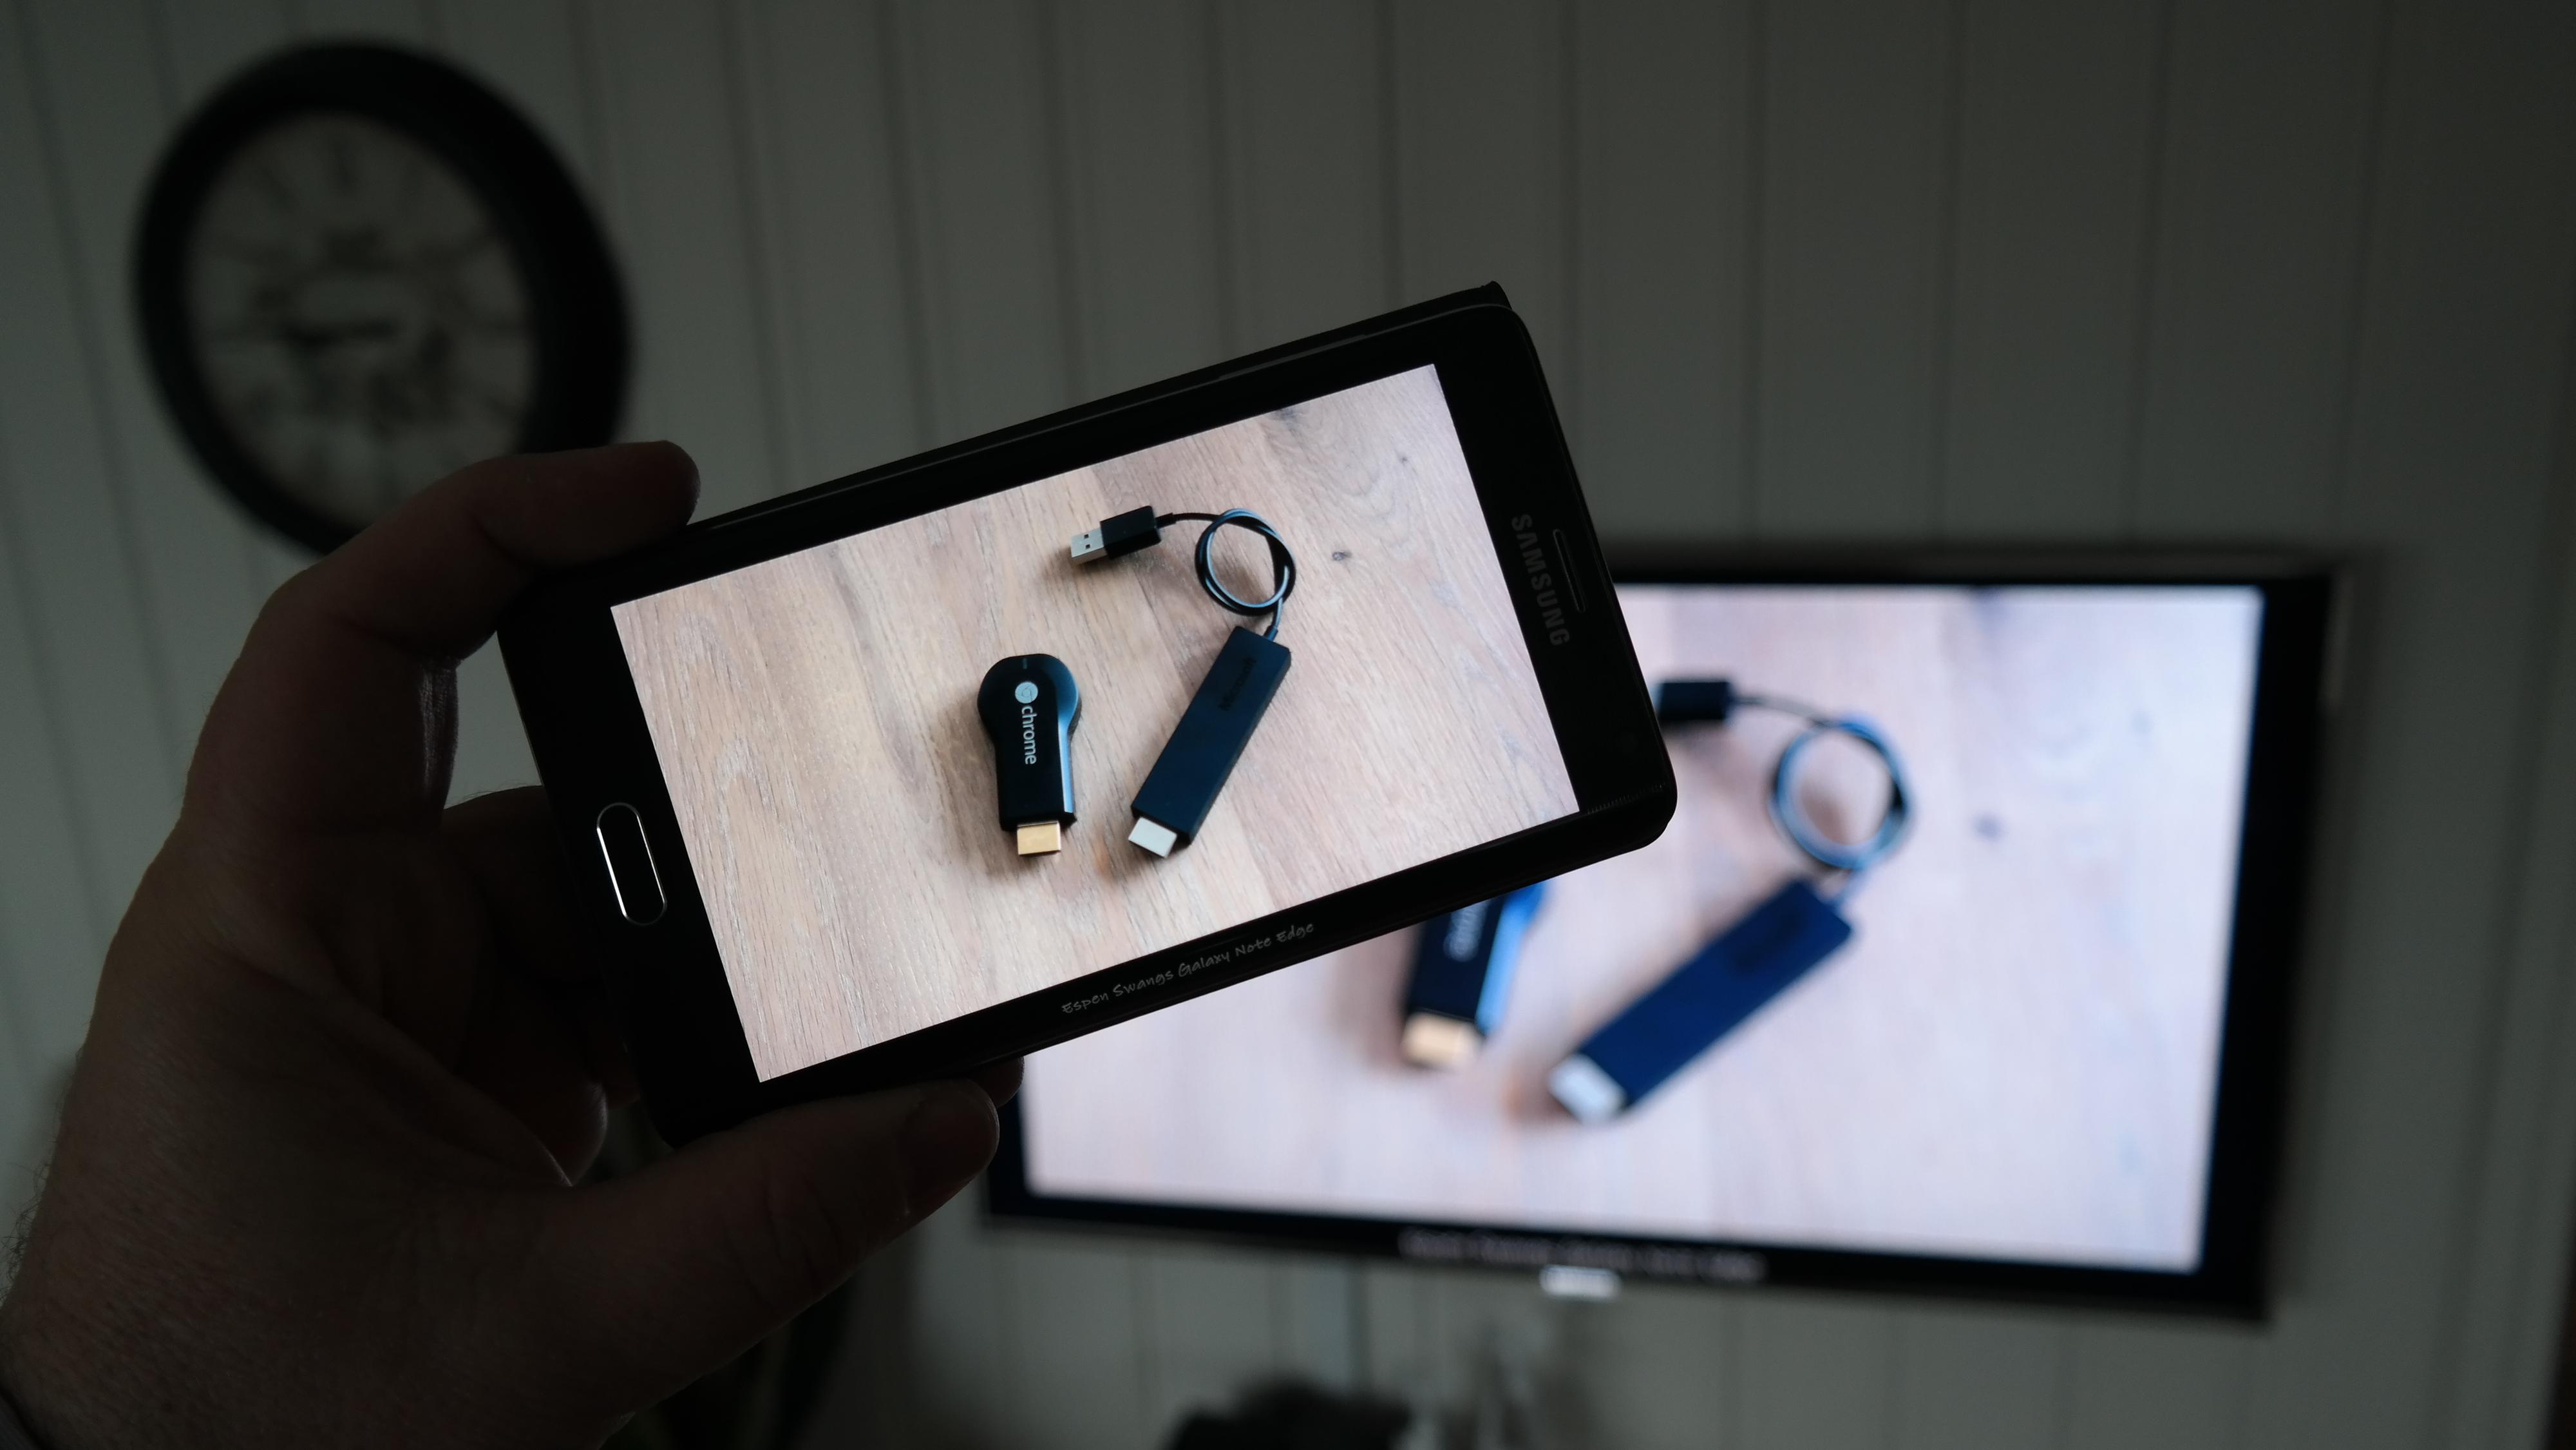 Vi koblet til SAmsung Galaxy Note 4 uten noen problemer. Foto: Espen Irwing Swang, Tek.no